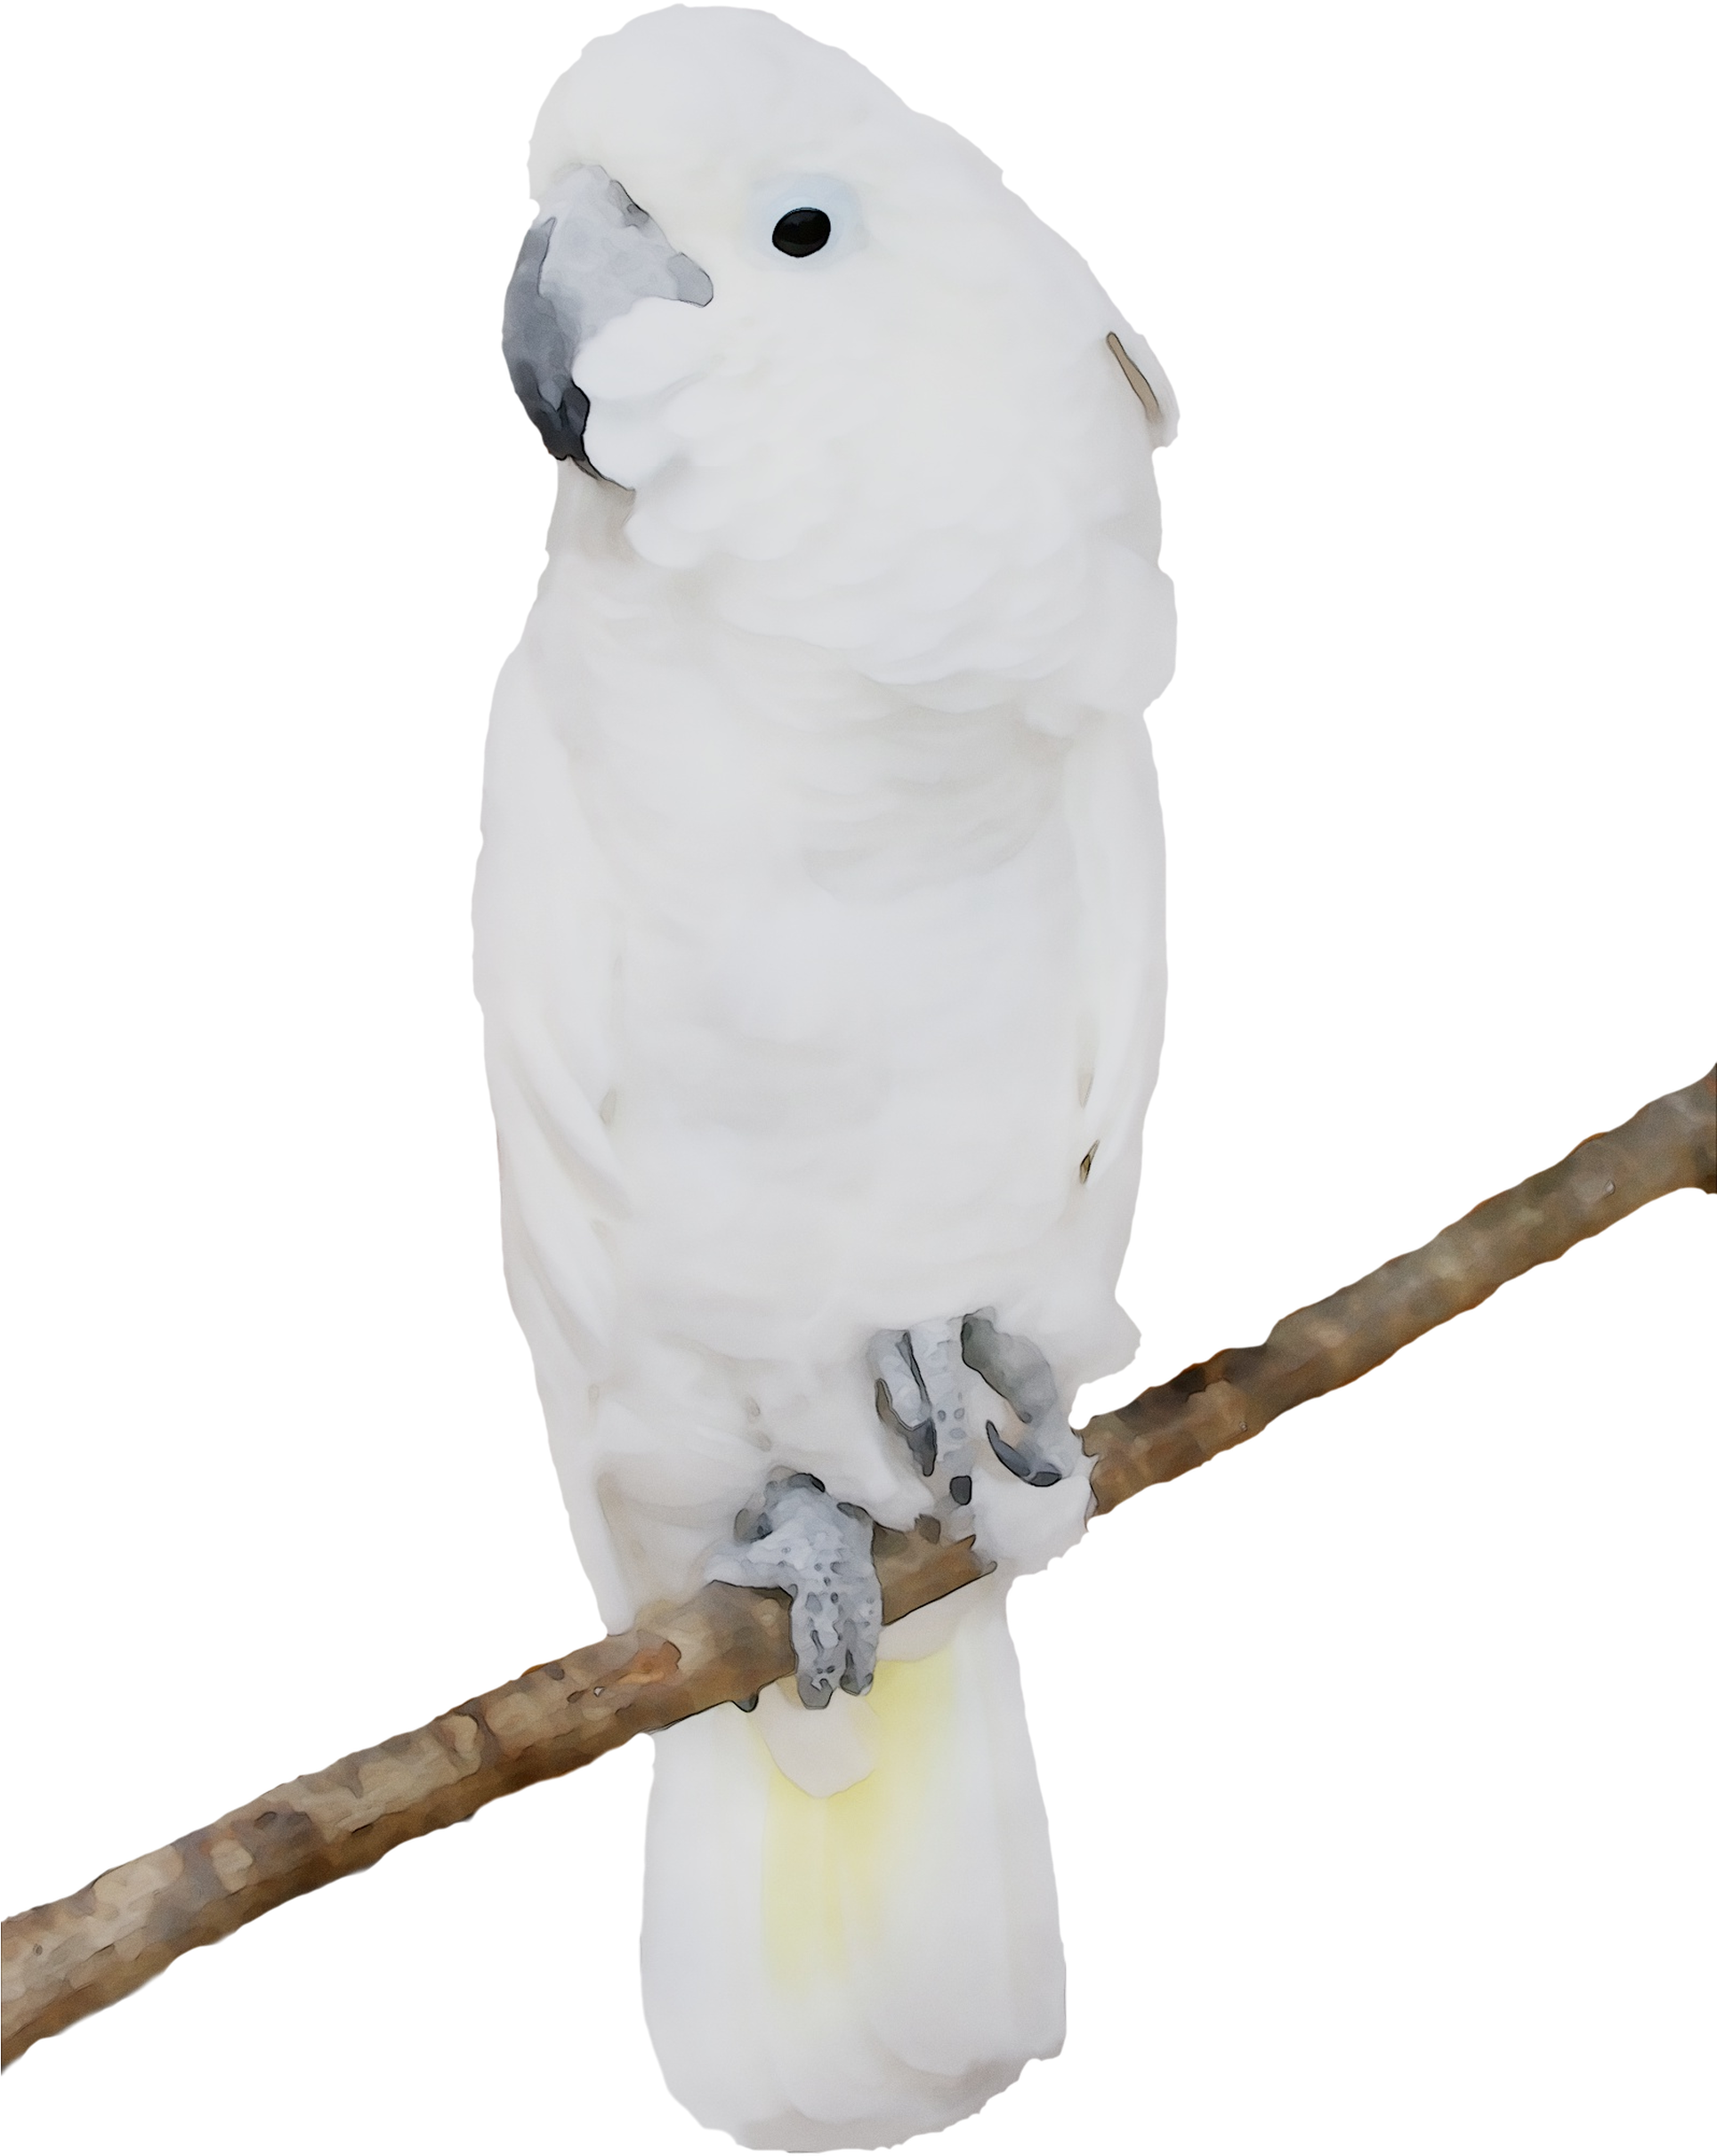 A White Bird On A Branch